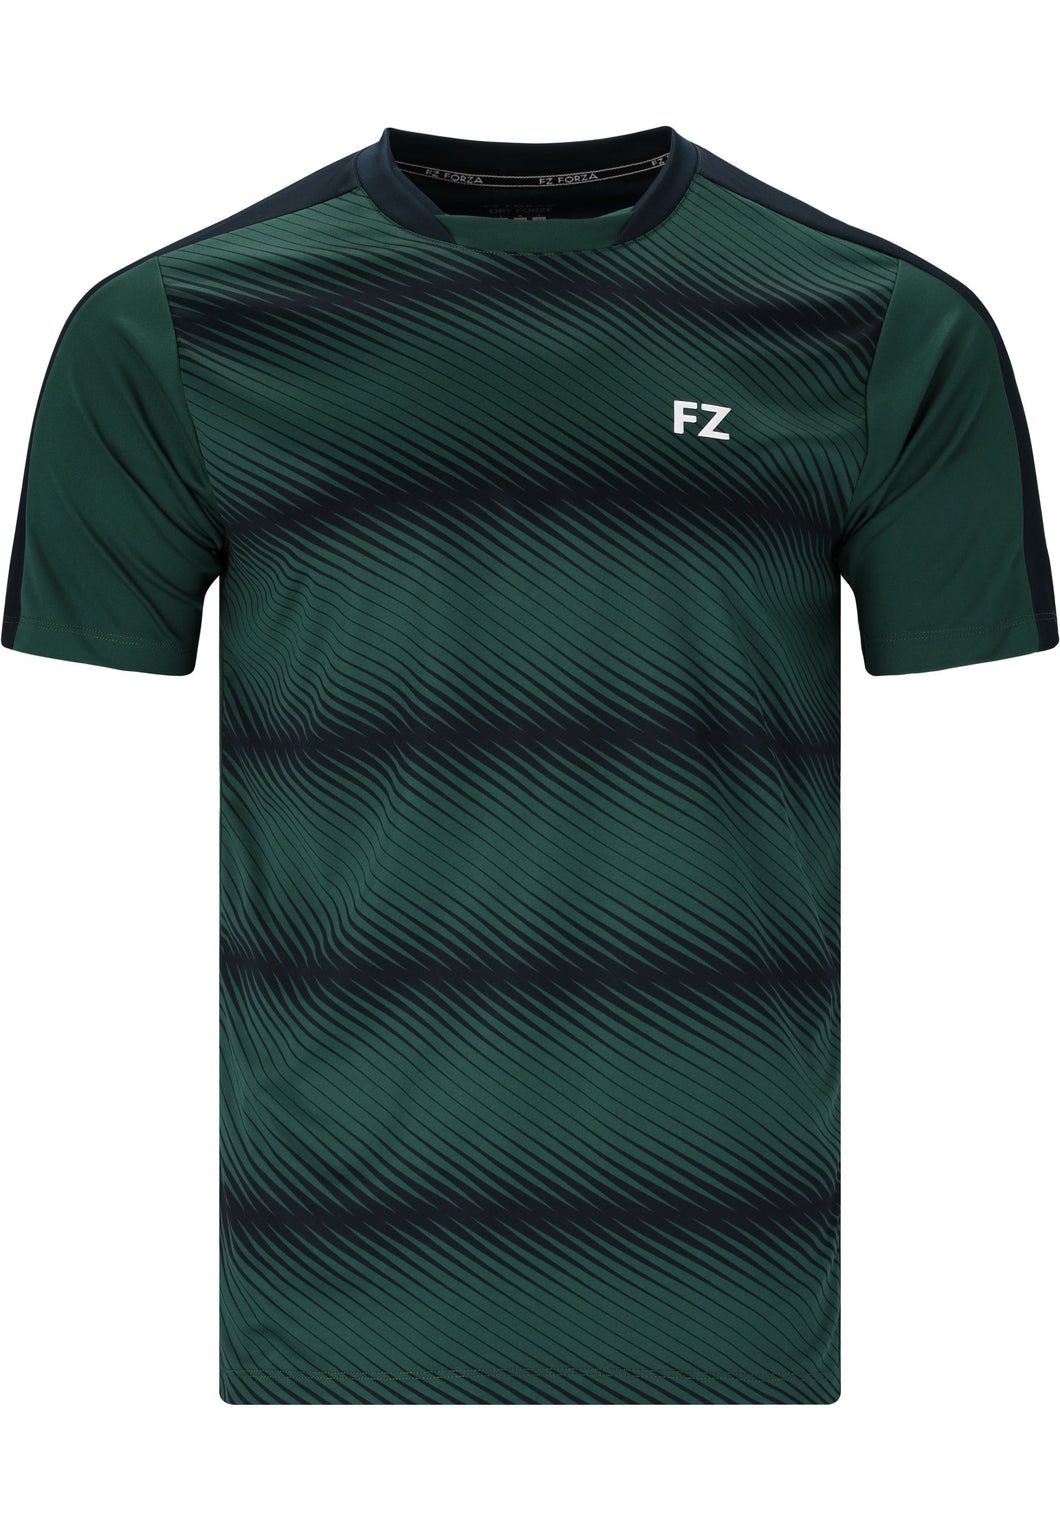 FZ Forza Lothar M S/S T-Shirt 3153 June Bug